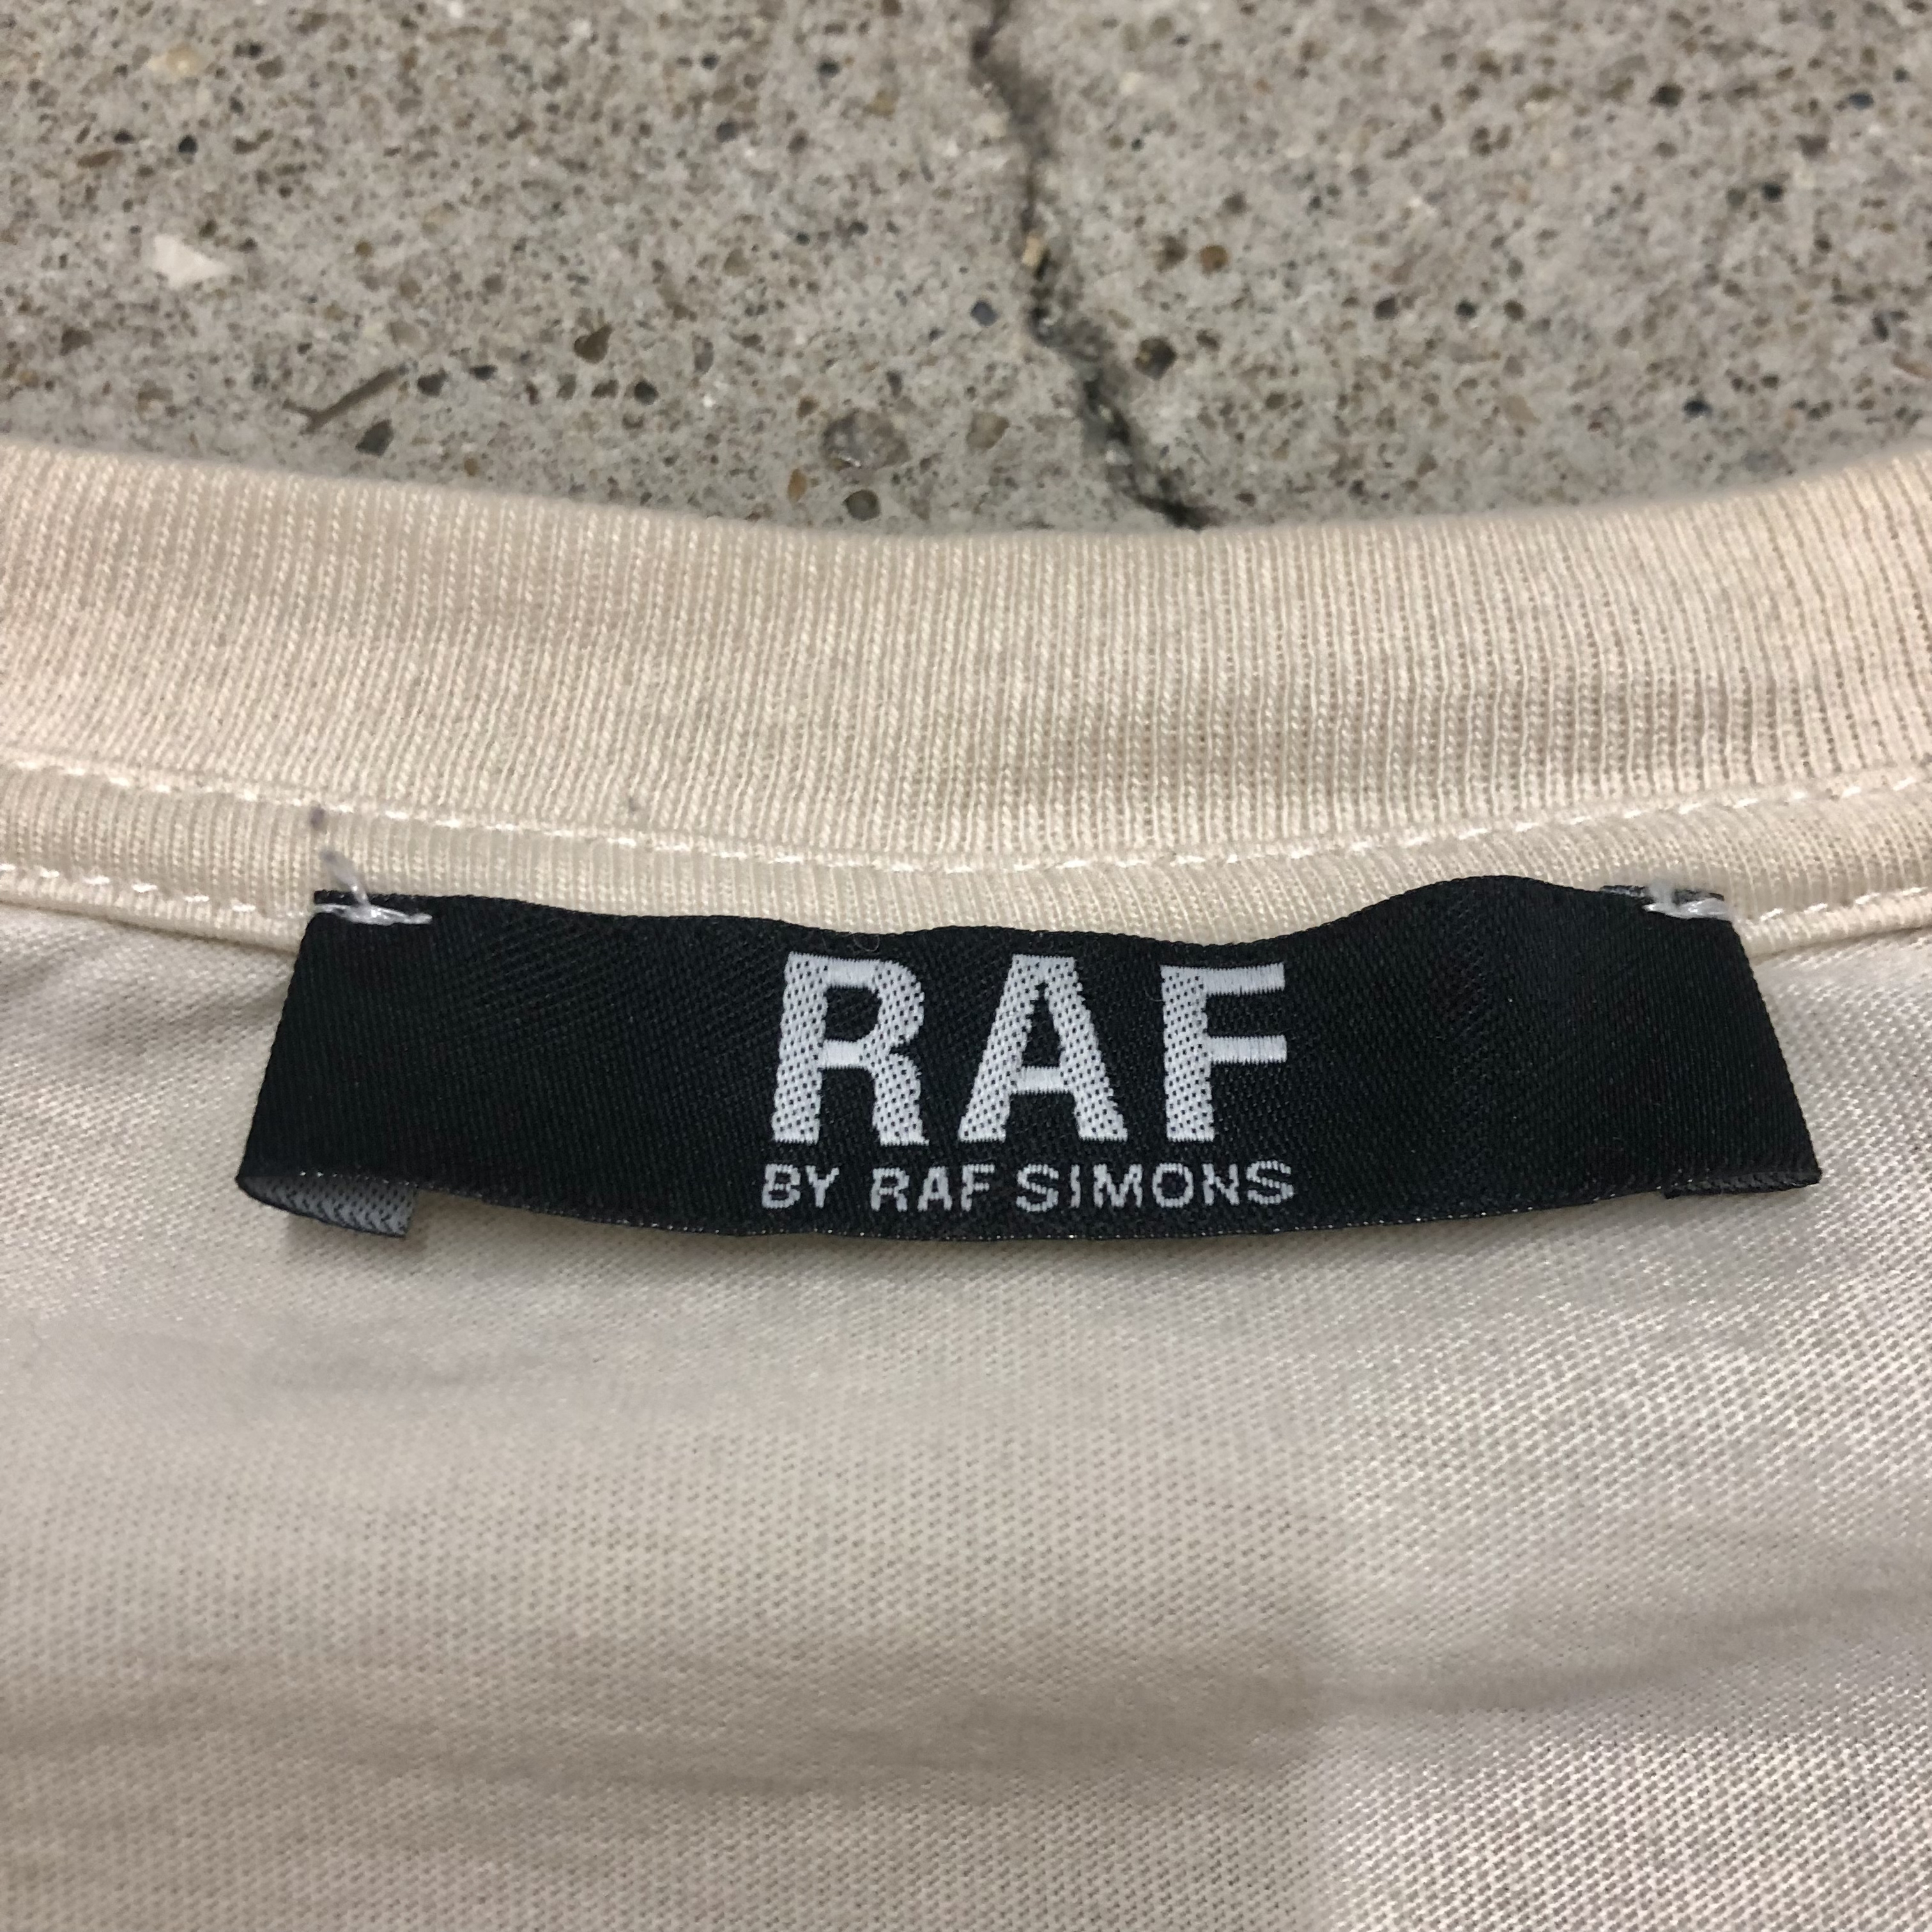 RAF BY RAF SIMONS/Patchwork Tee/S/パッチワーク/安全ピン/Tシャツ